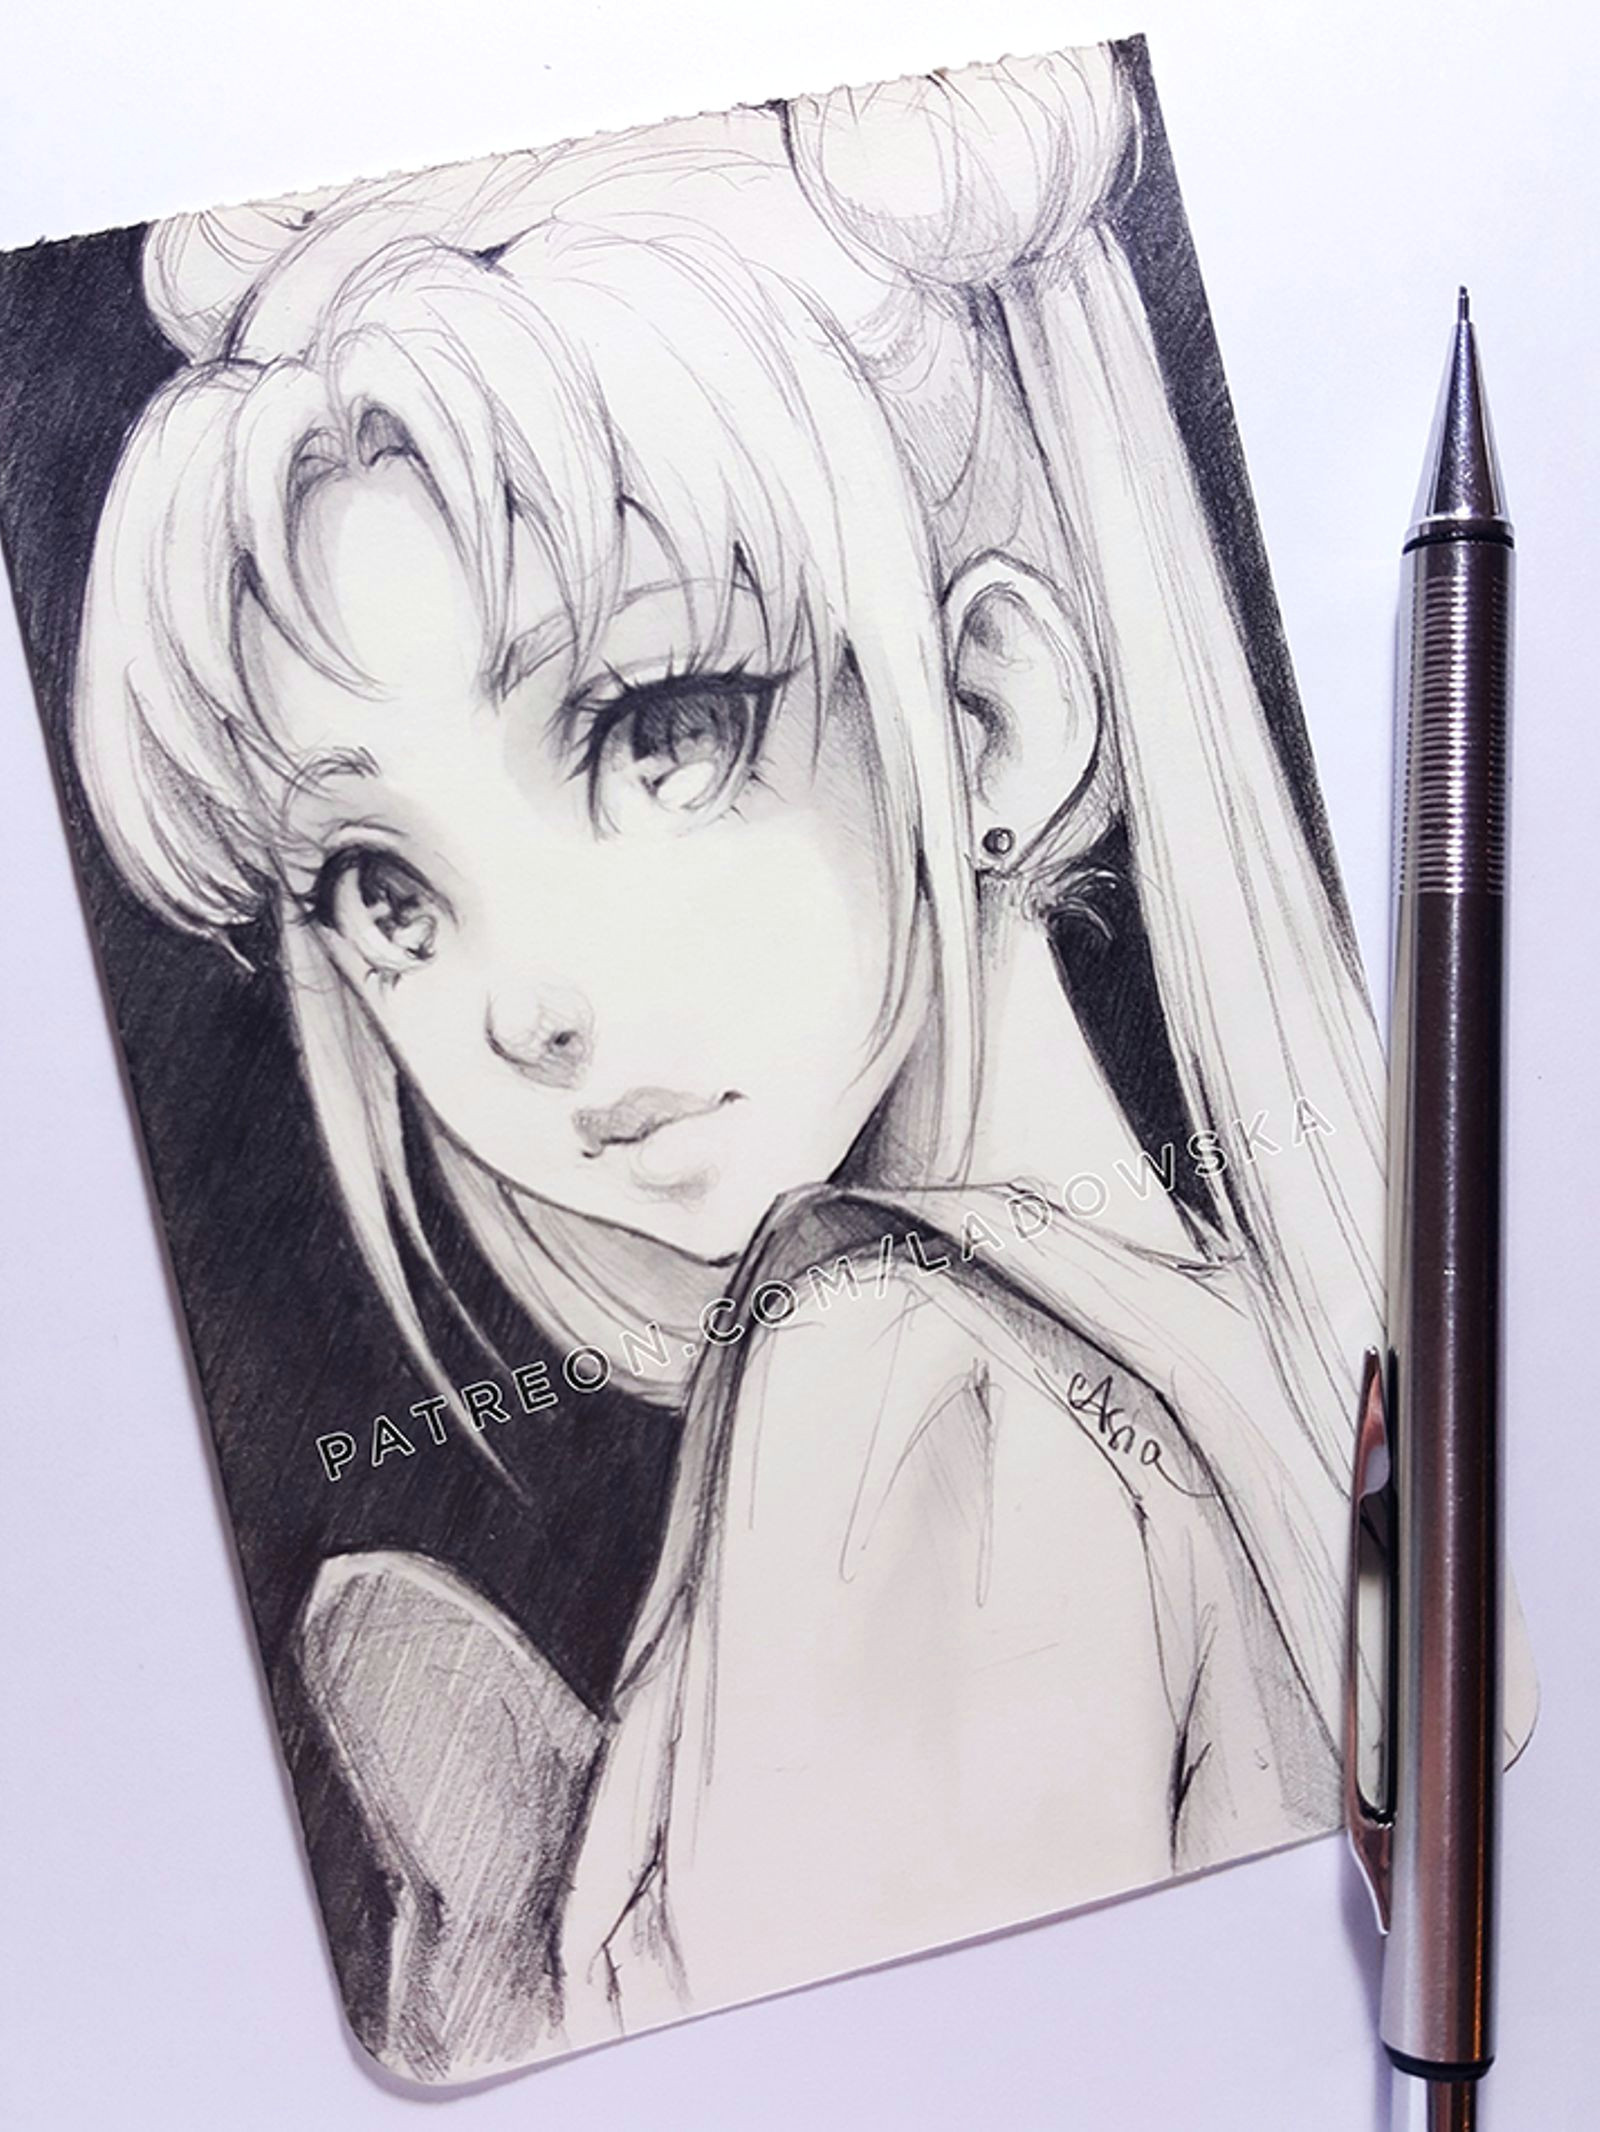 Drawing Anime Ink Imagem Relacionada Desenhar Pinterest Drawings Anime and Manga